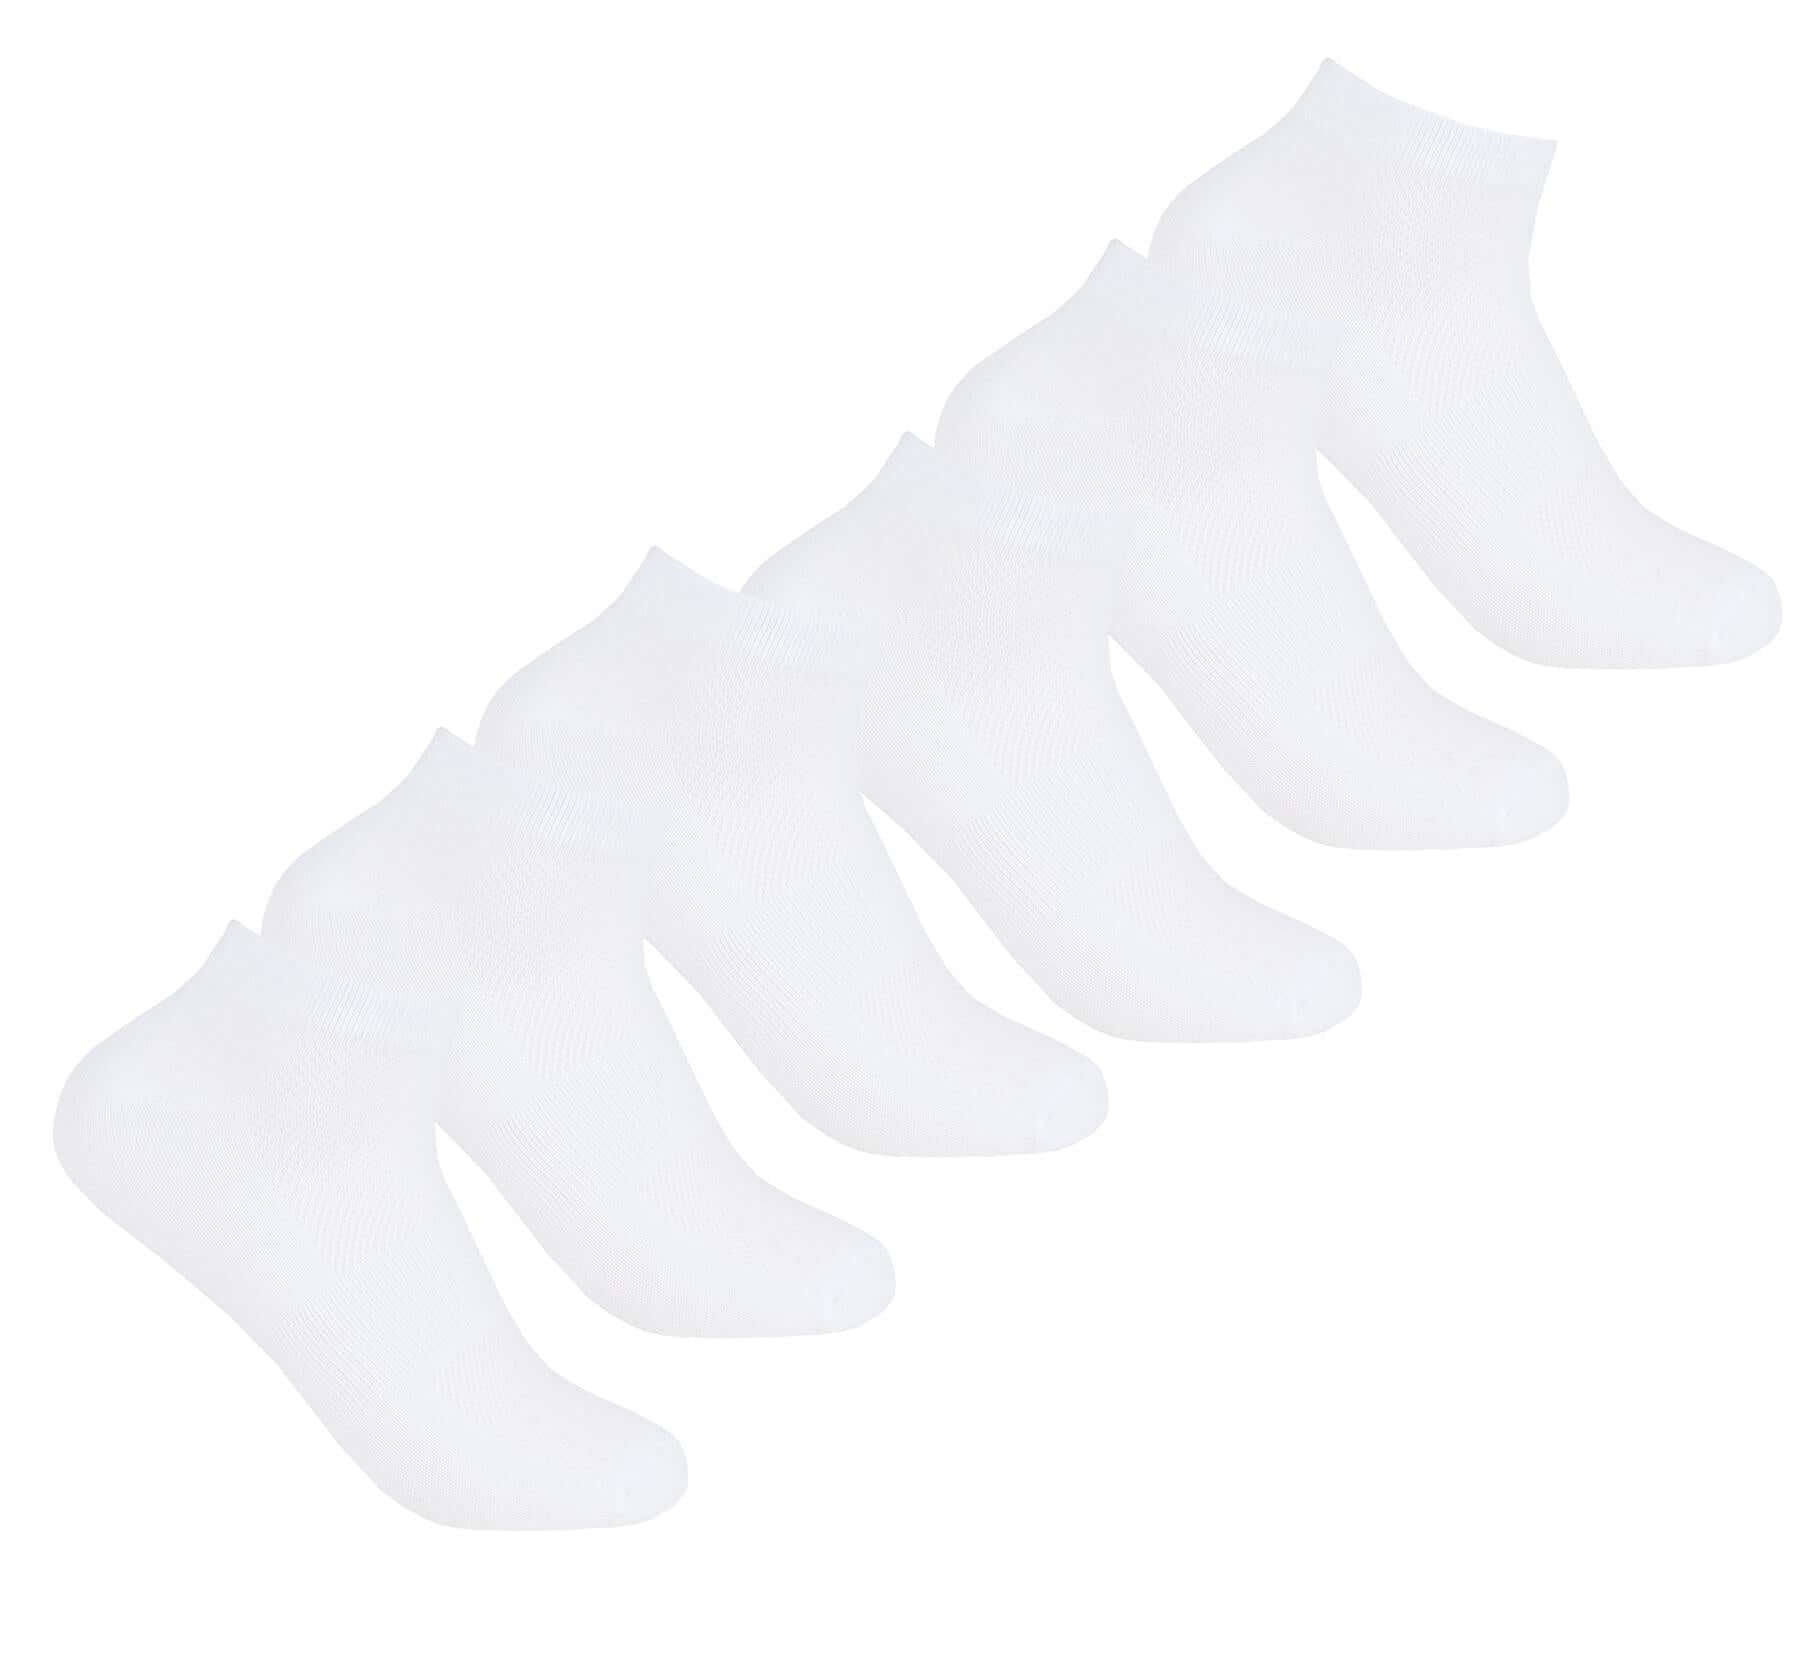 6 Pairs Of Men's Bamboo Trainer Socks, Liner Sock, Sports Summer Holiday. Buy now for £7.00. A Socks by Sock Stack. 6-11, anti blister, bamboo, black, boot socks, boys socks, breathable, comfortable, cosy, elastane, grey, holidays, man, mens, mens socks,